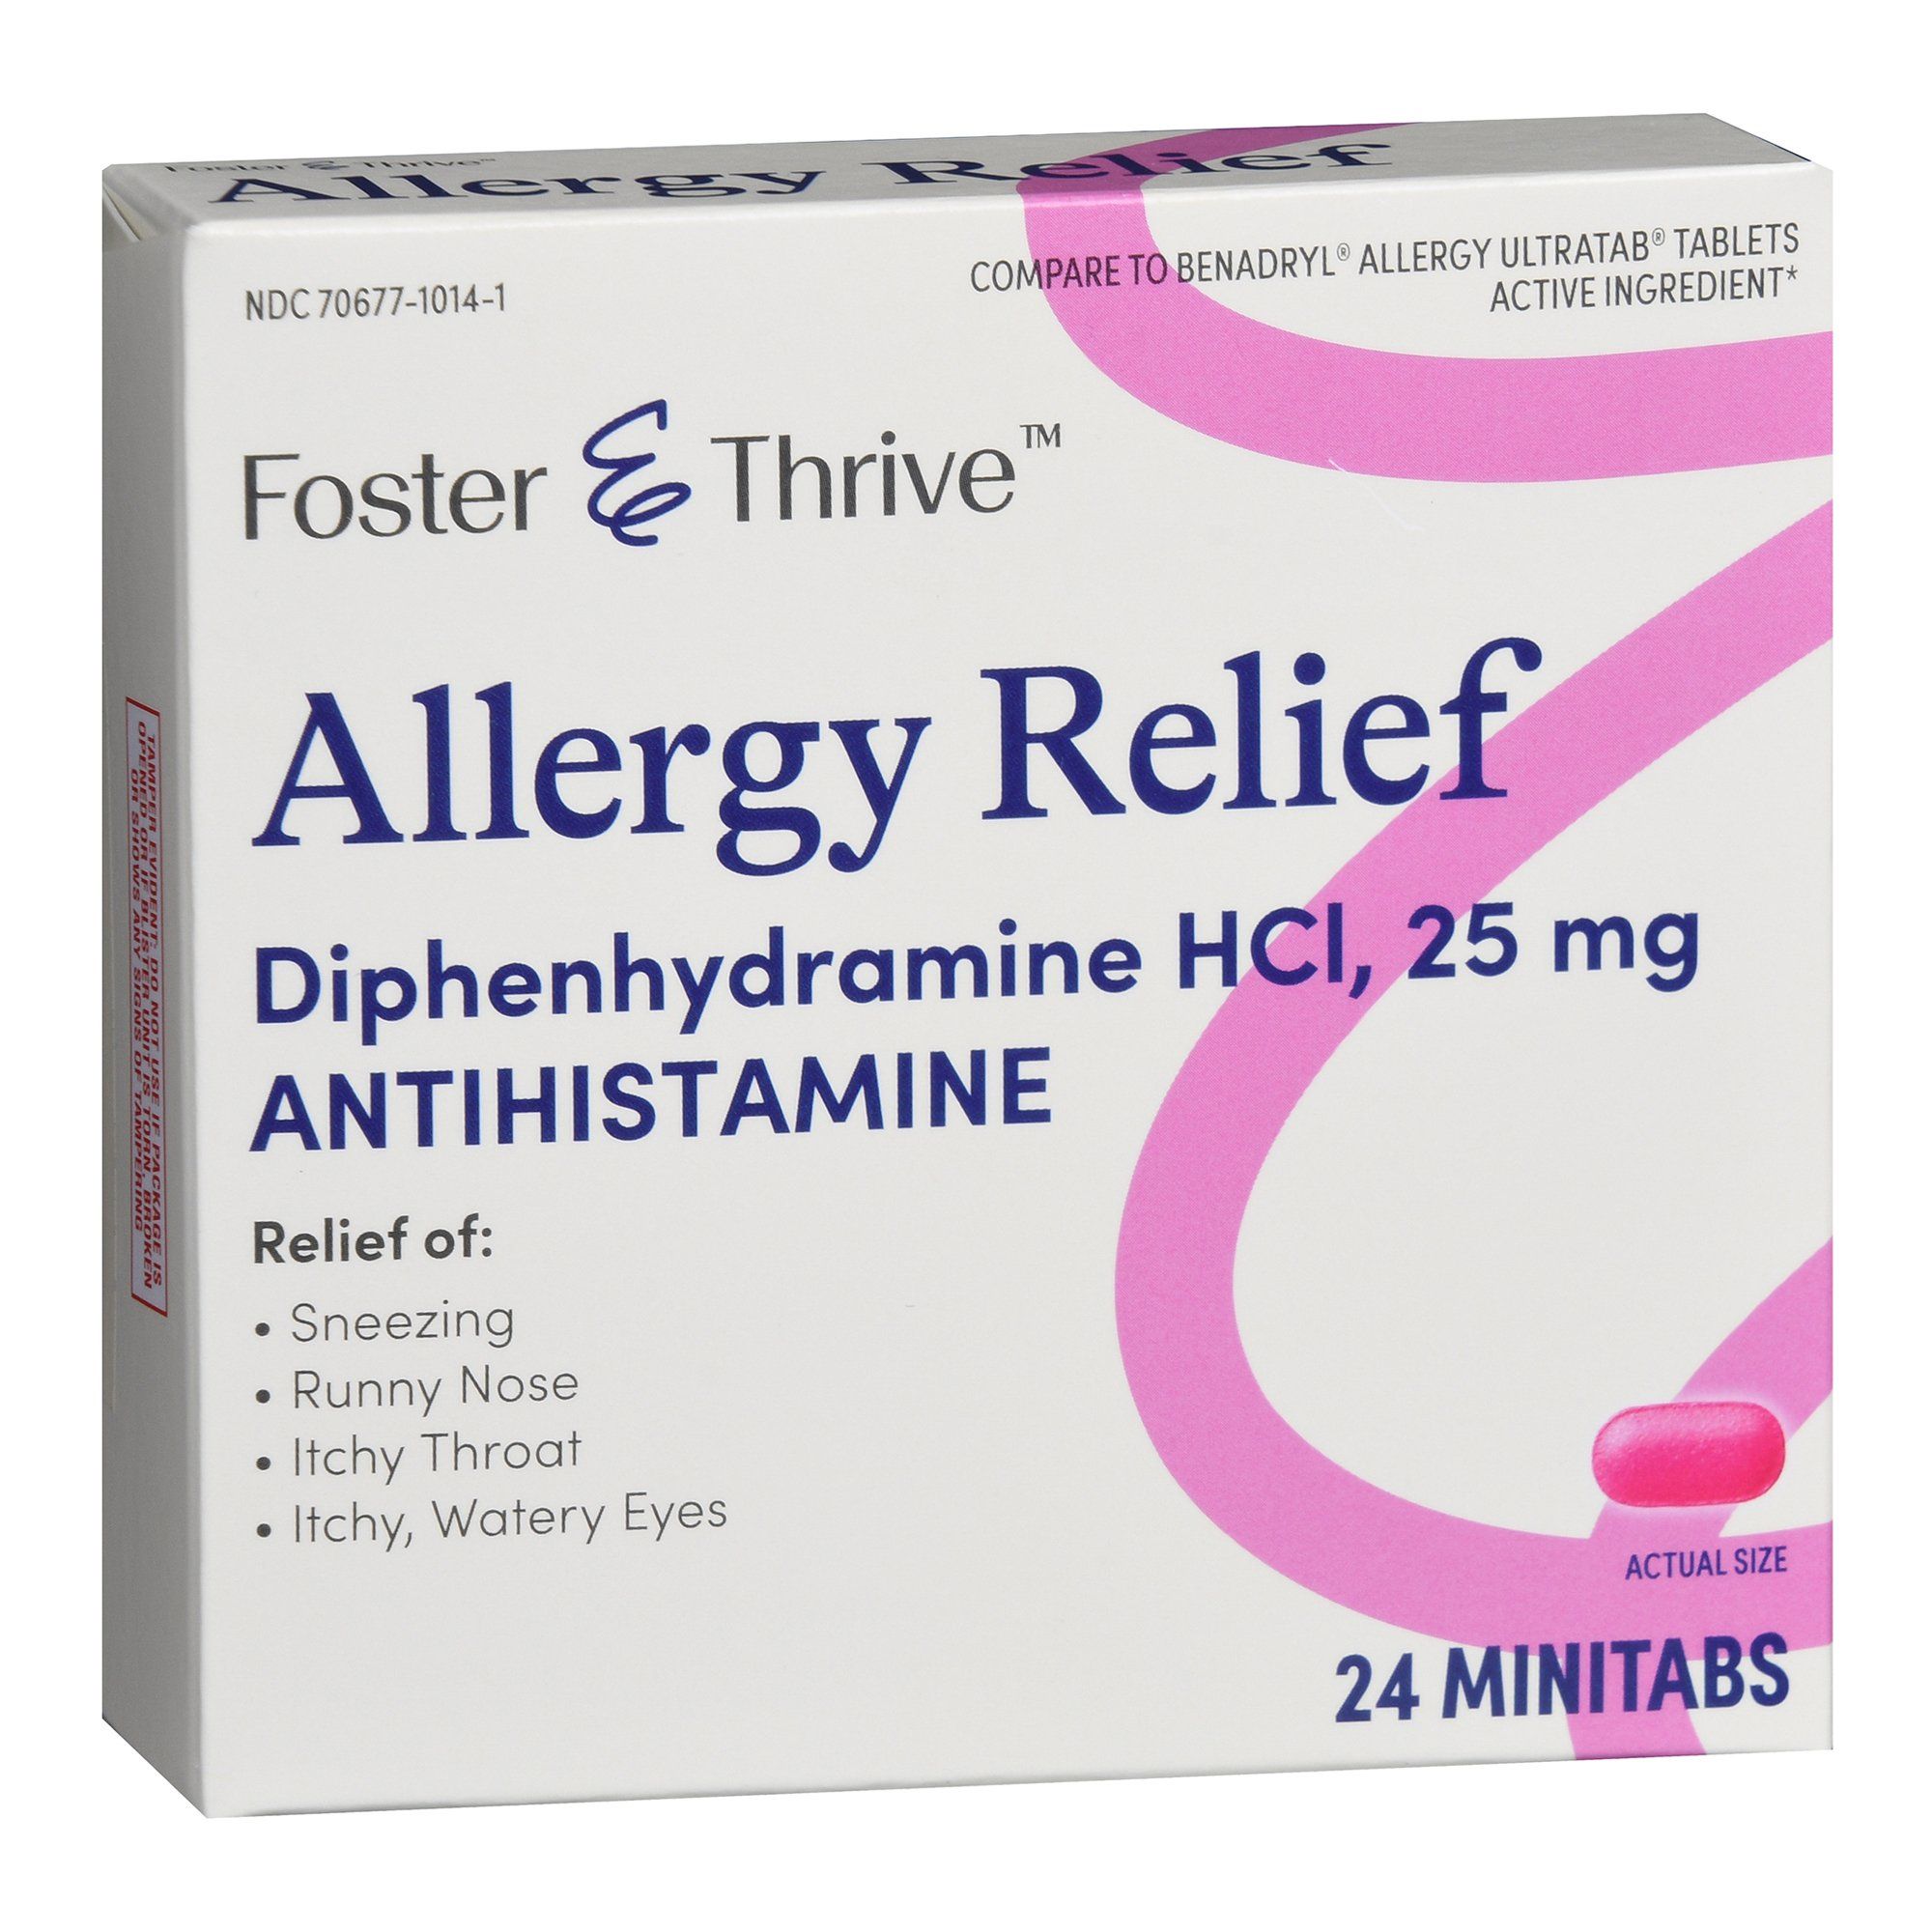 Foster & Thrive Allergy Relief Diphenhydramine HC Minitabs, 25 mg - 24 ct